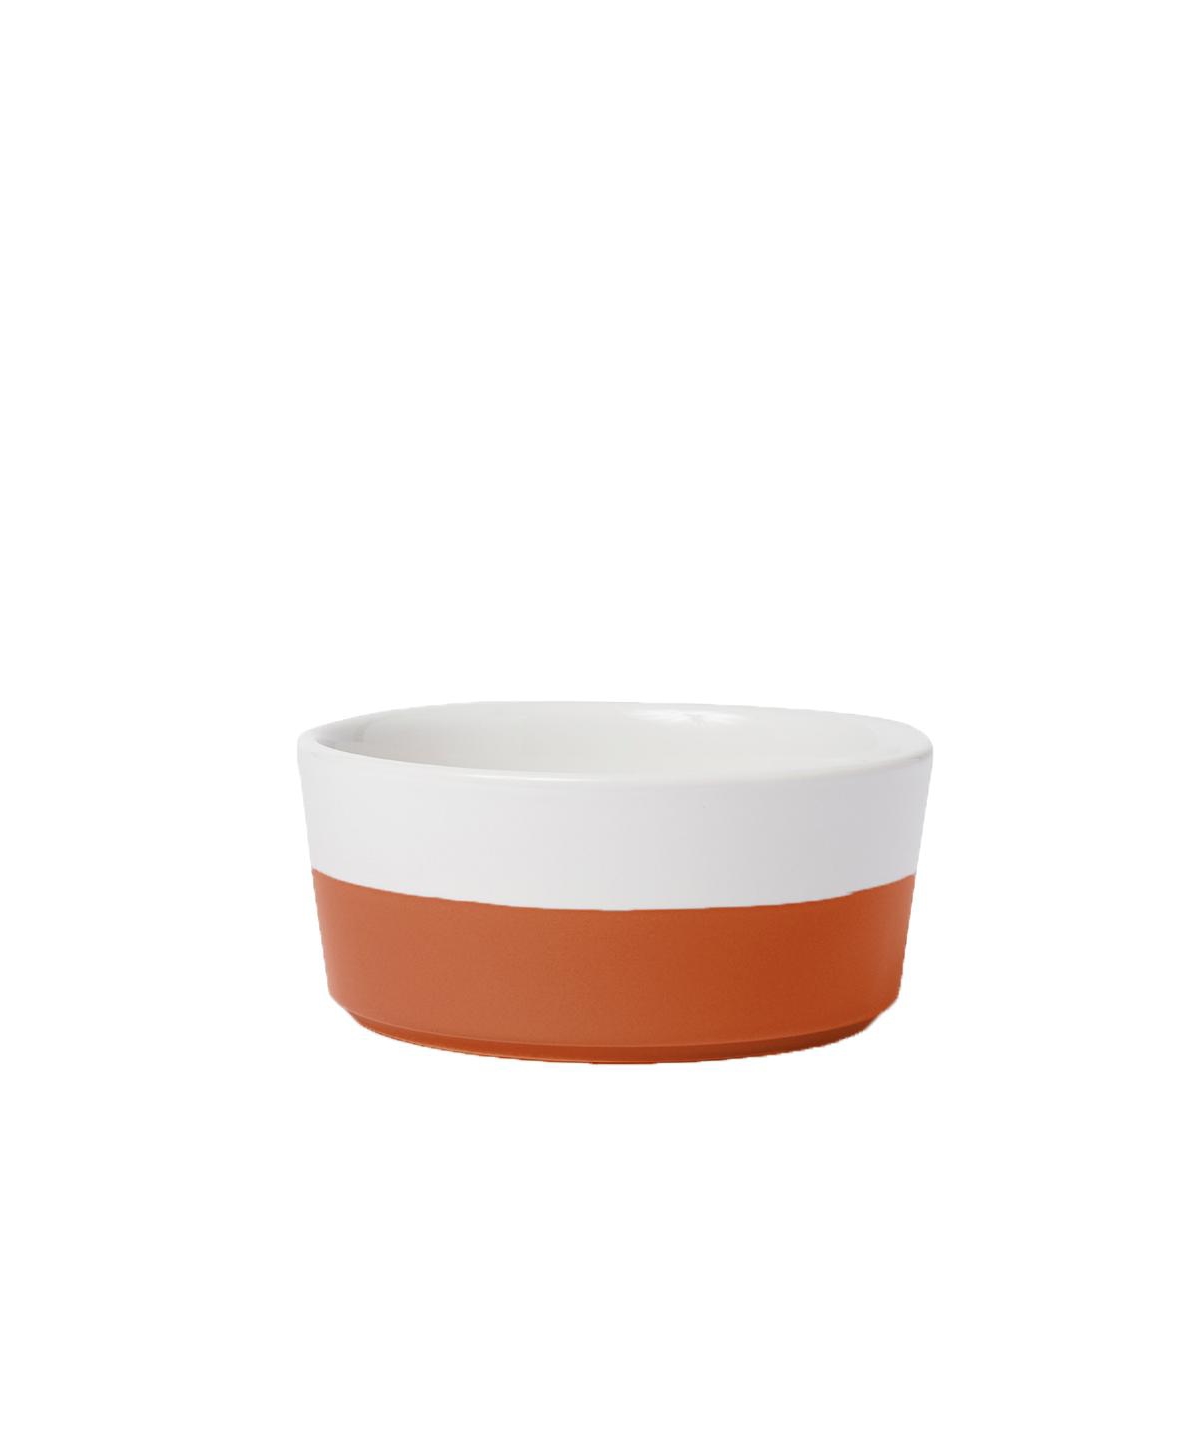 Dog Dipper Bowl Medium Terracotta - Medium - Terracotta